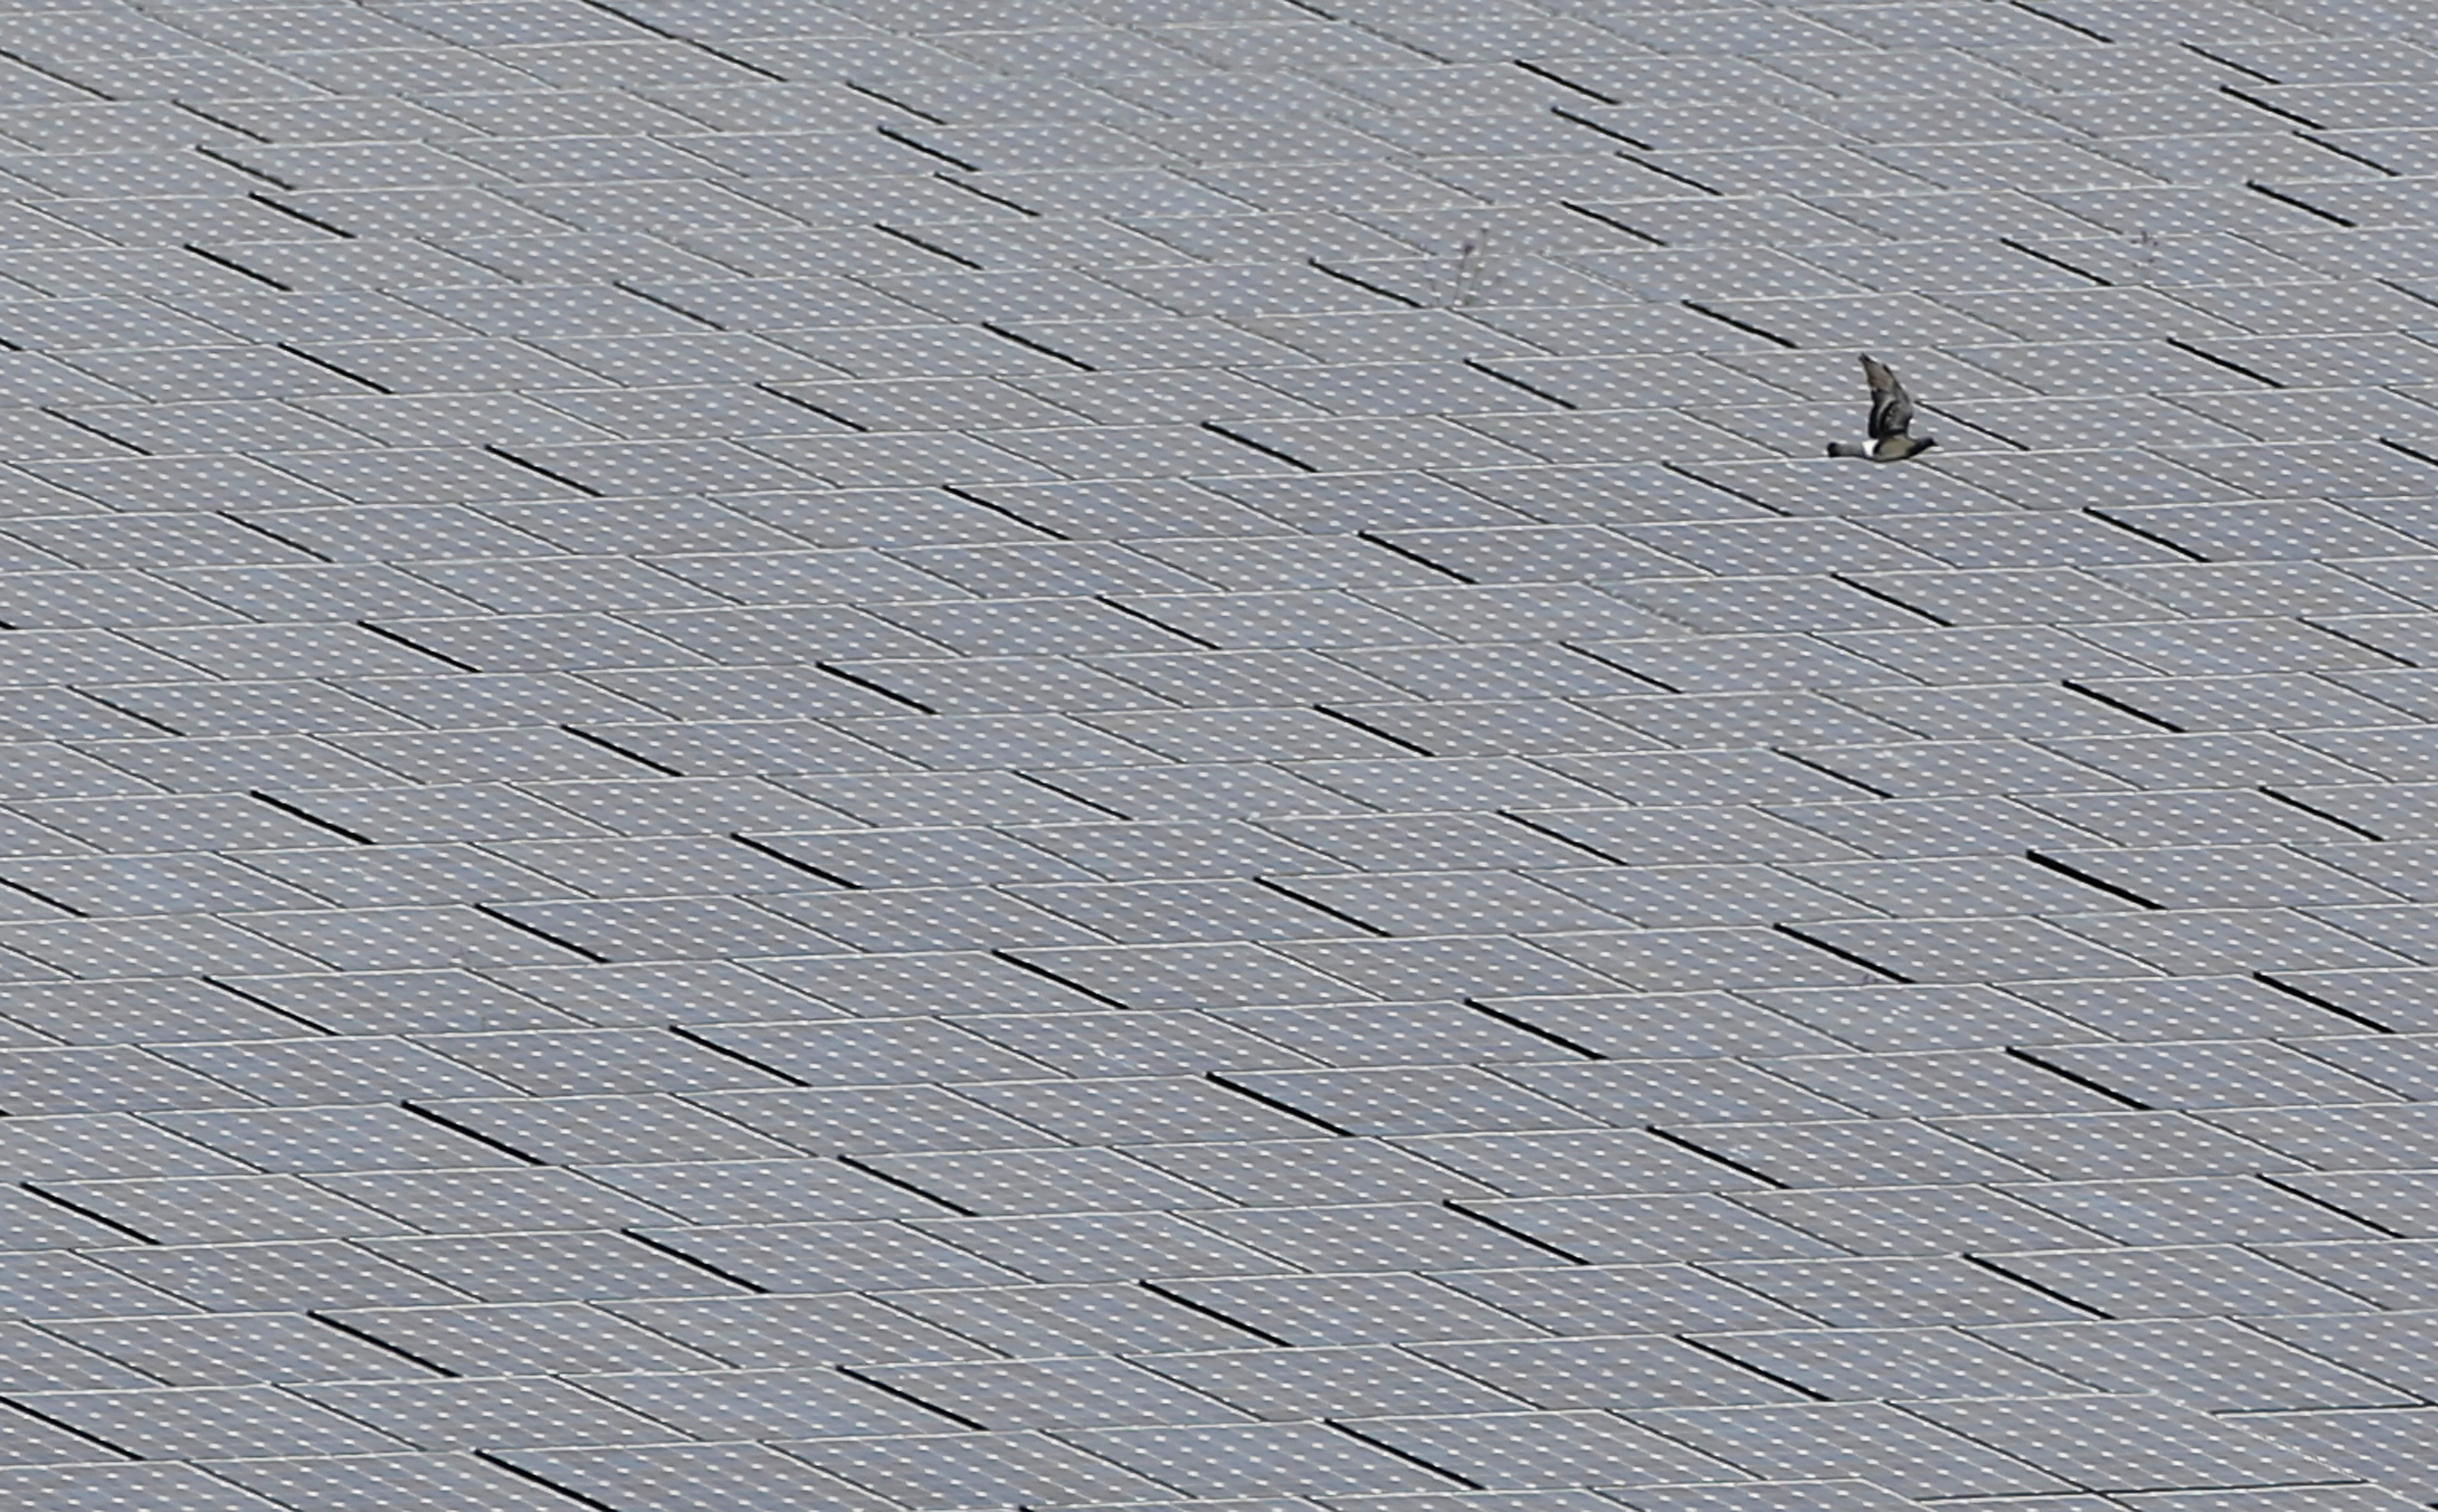 A dove flies over solar panels at a solar power field in Kawasaki, near Tokyo